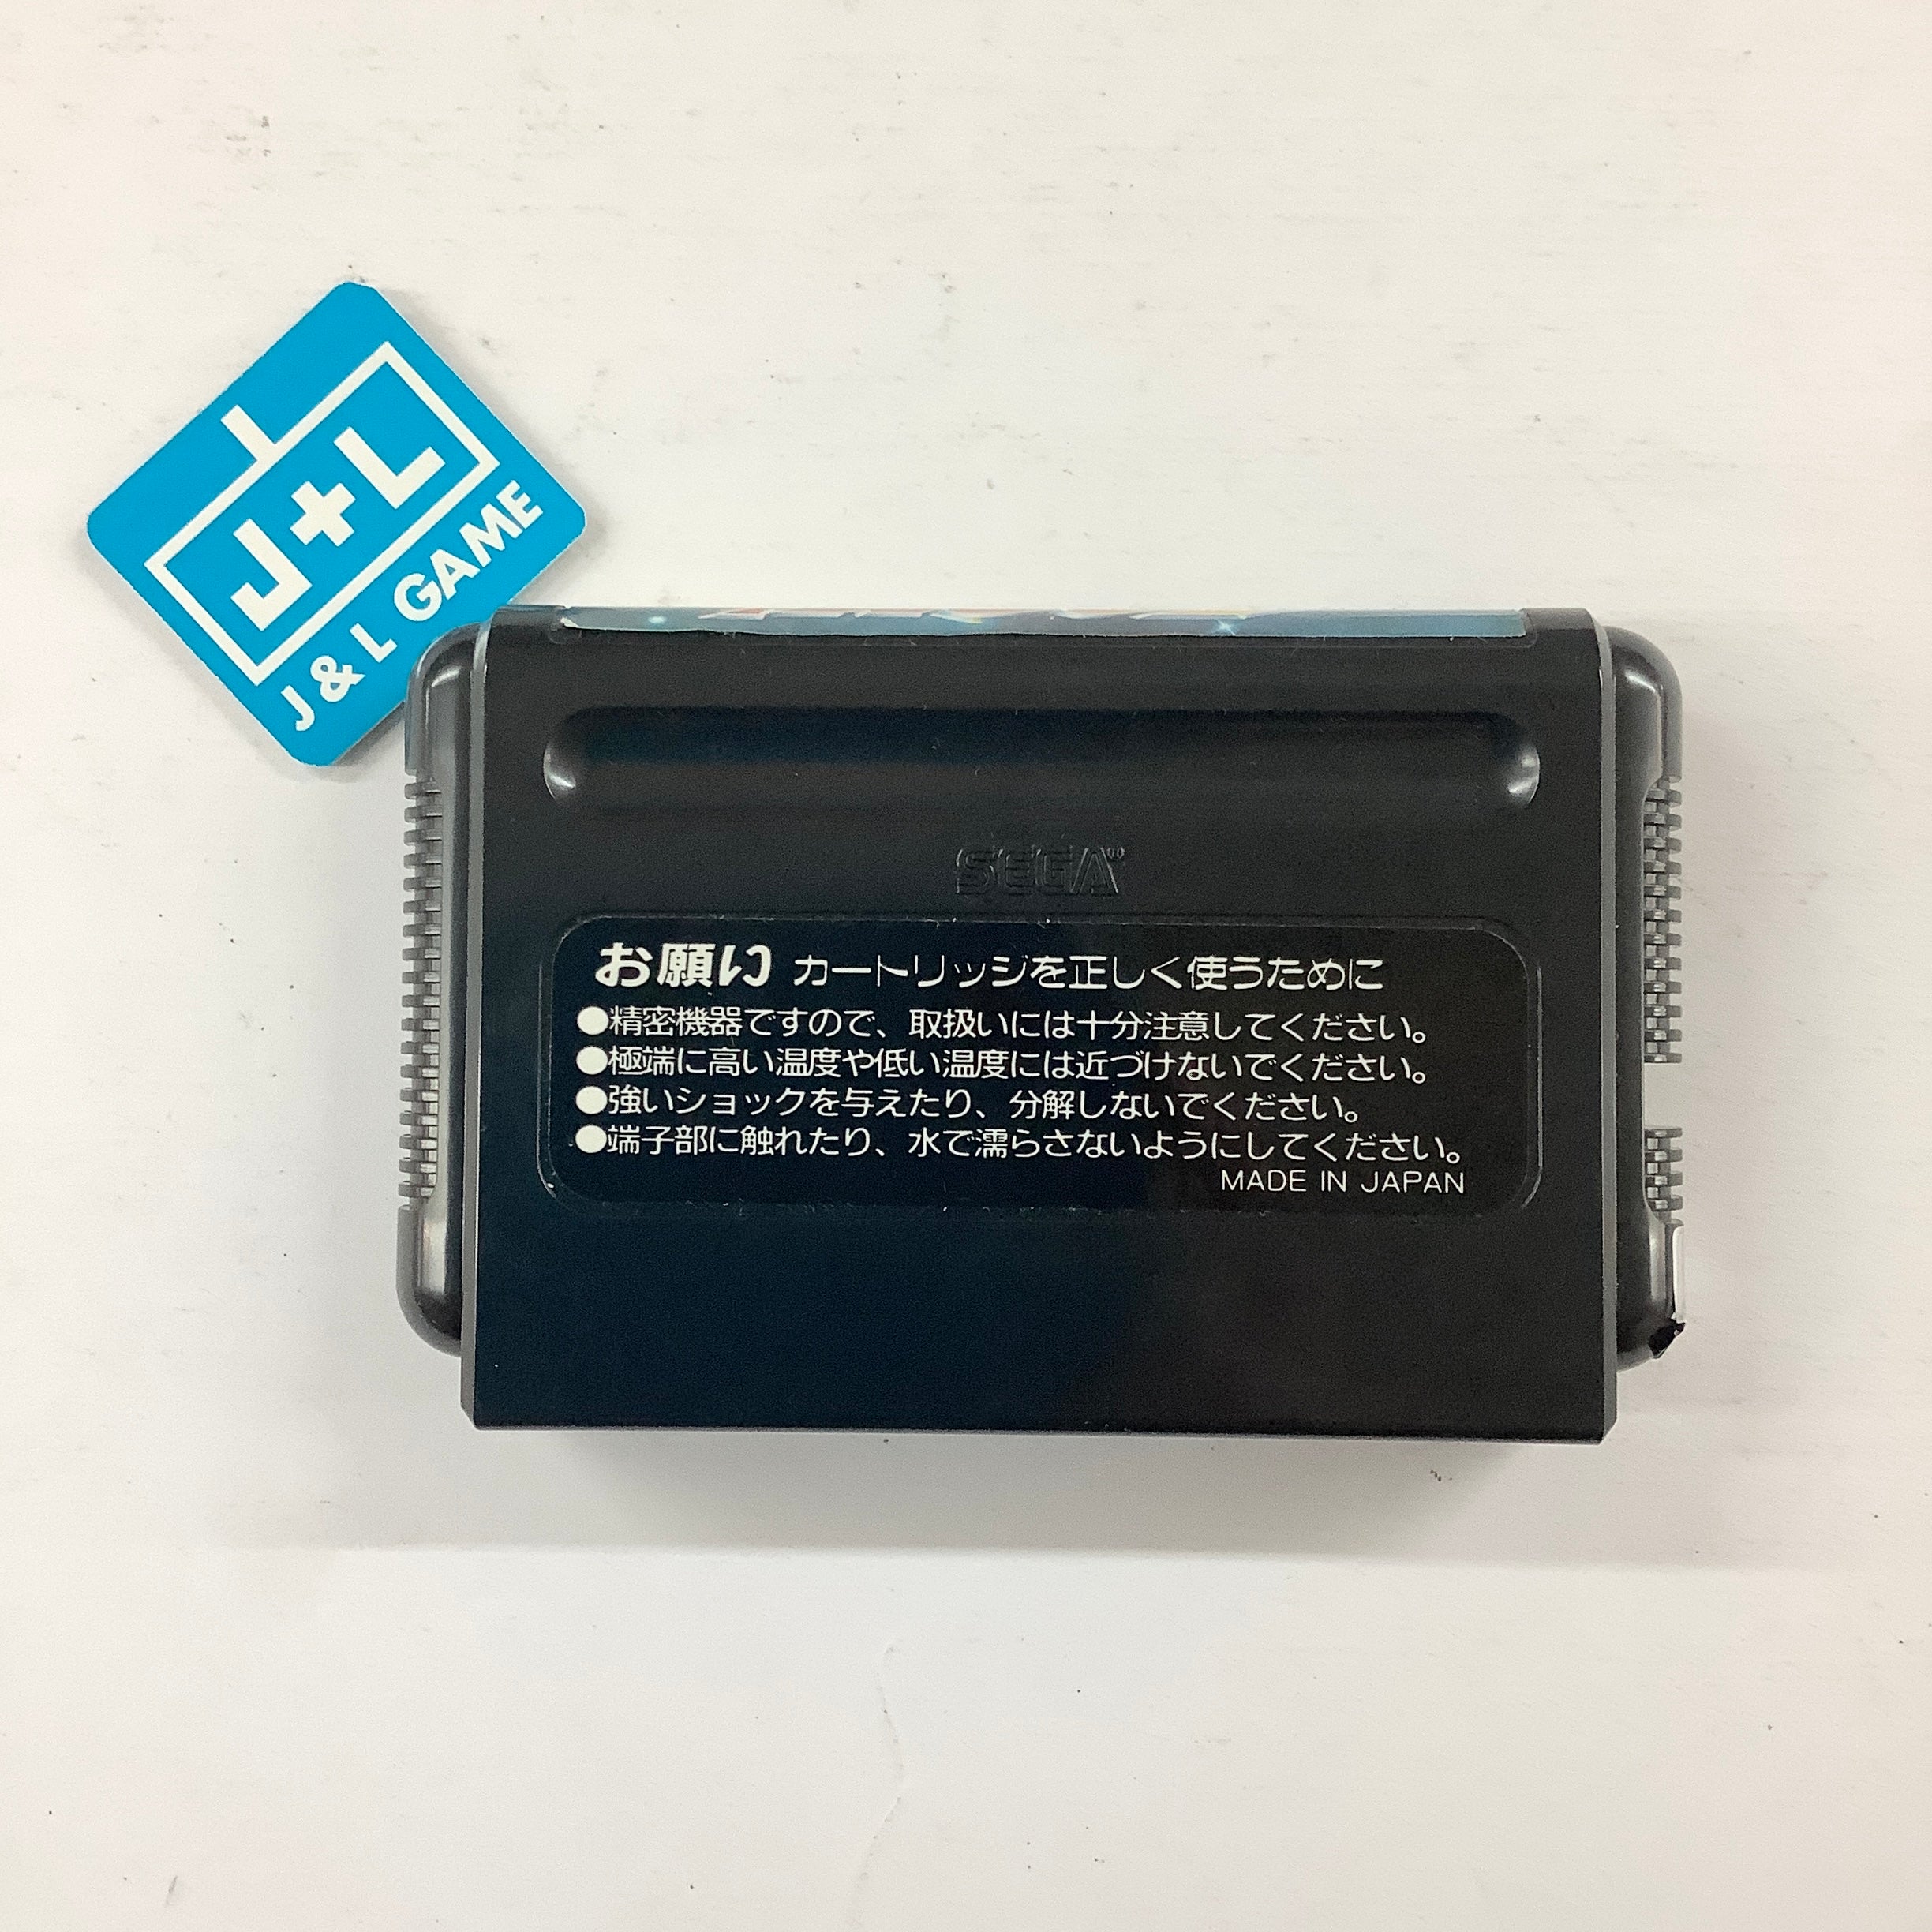 Zoom! - (SG) SEGA Mega Drive [Pre-Owned] (Japanese Import) Video Games Sega   